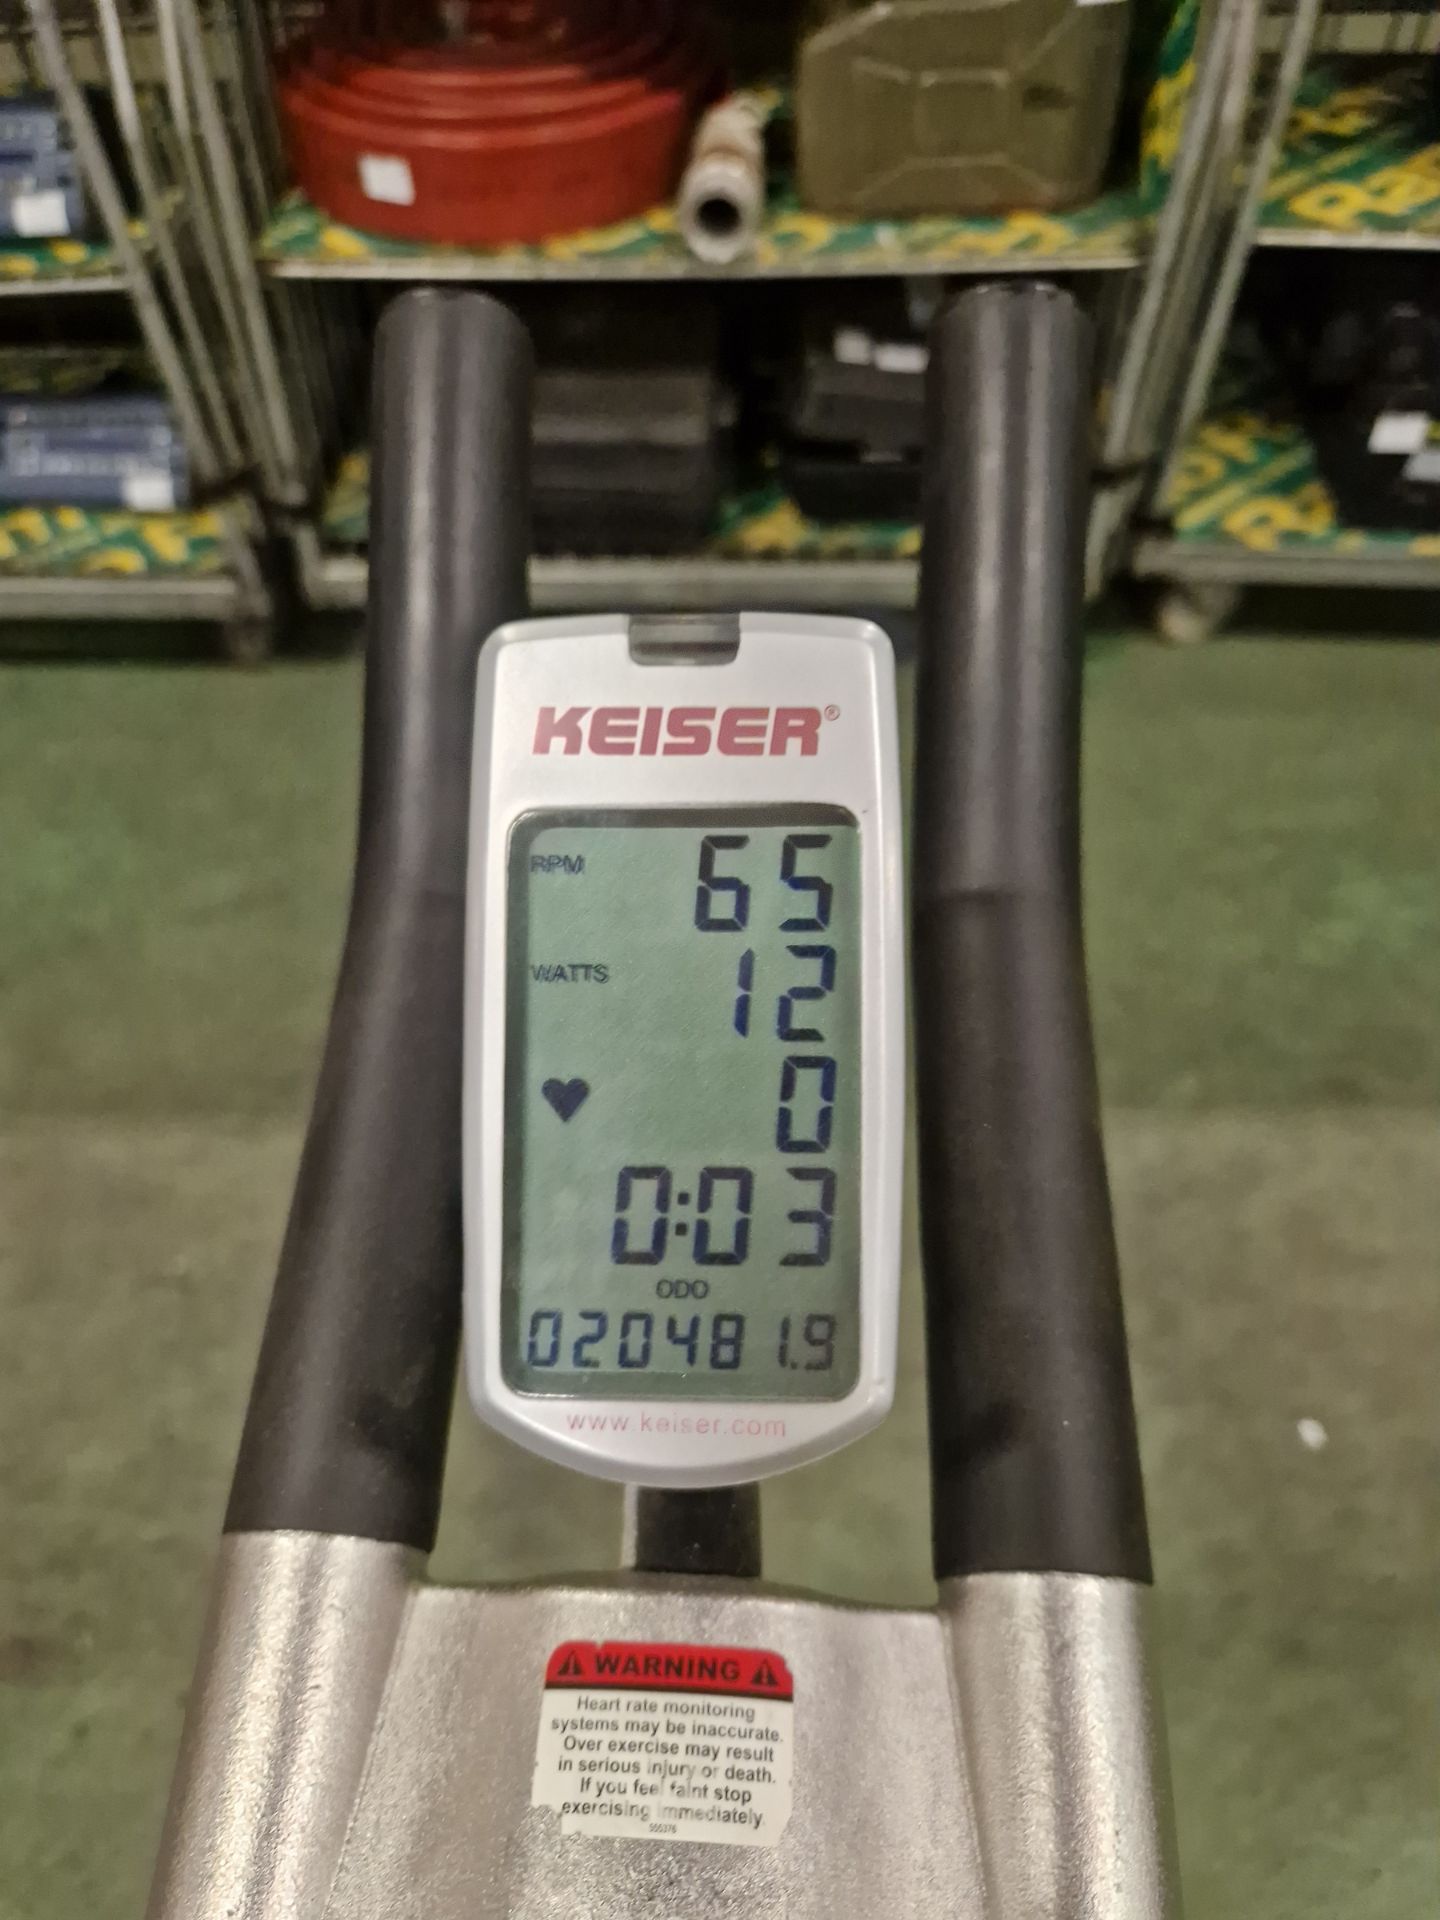 Keiser M3 exercise spin bike - Image 5 of 5